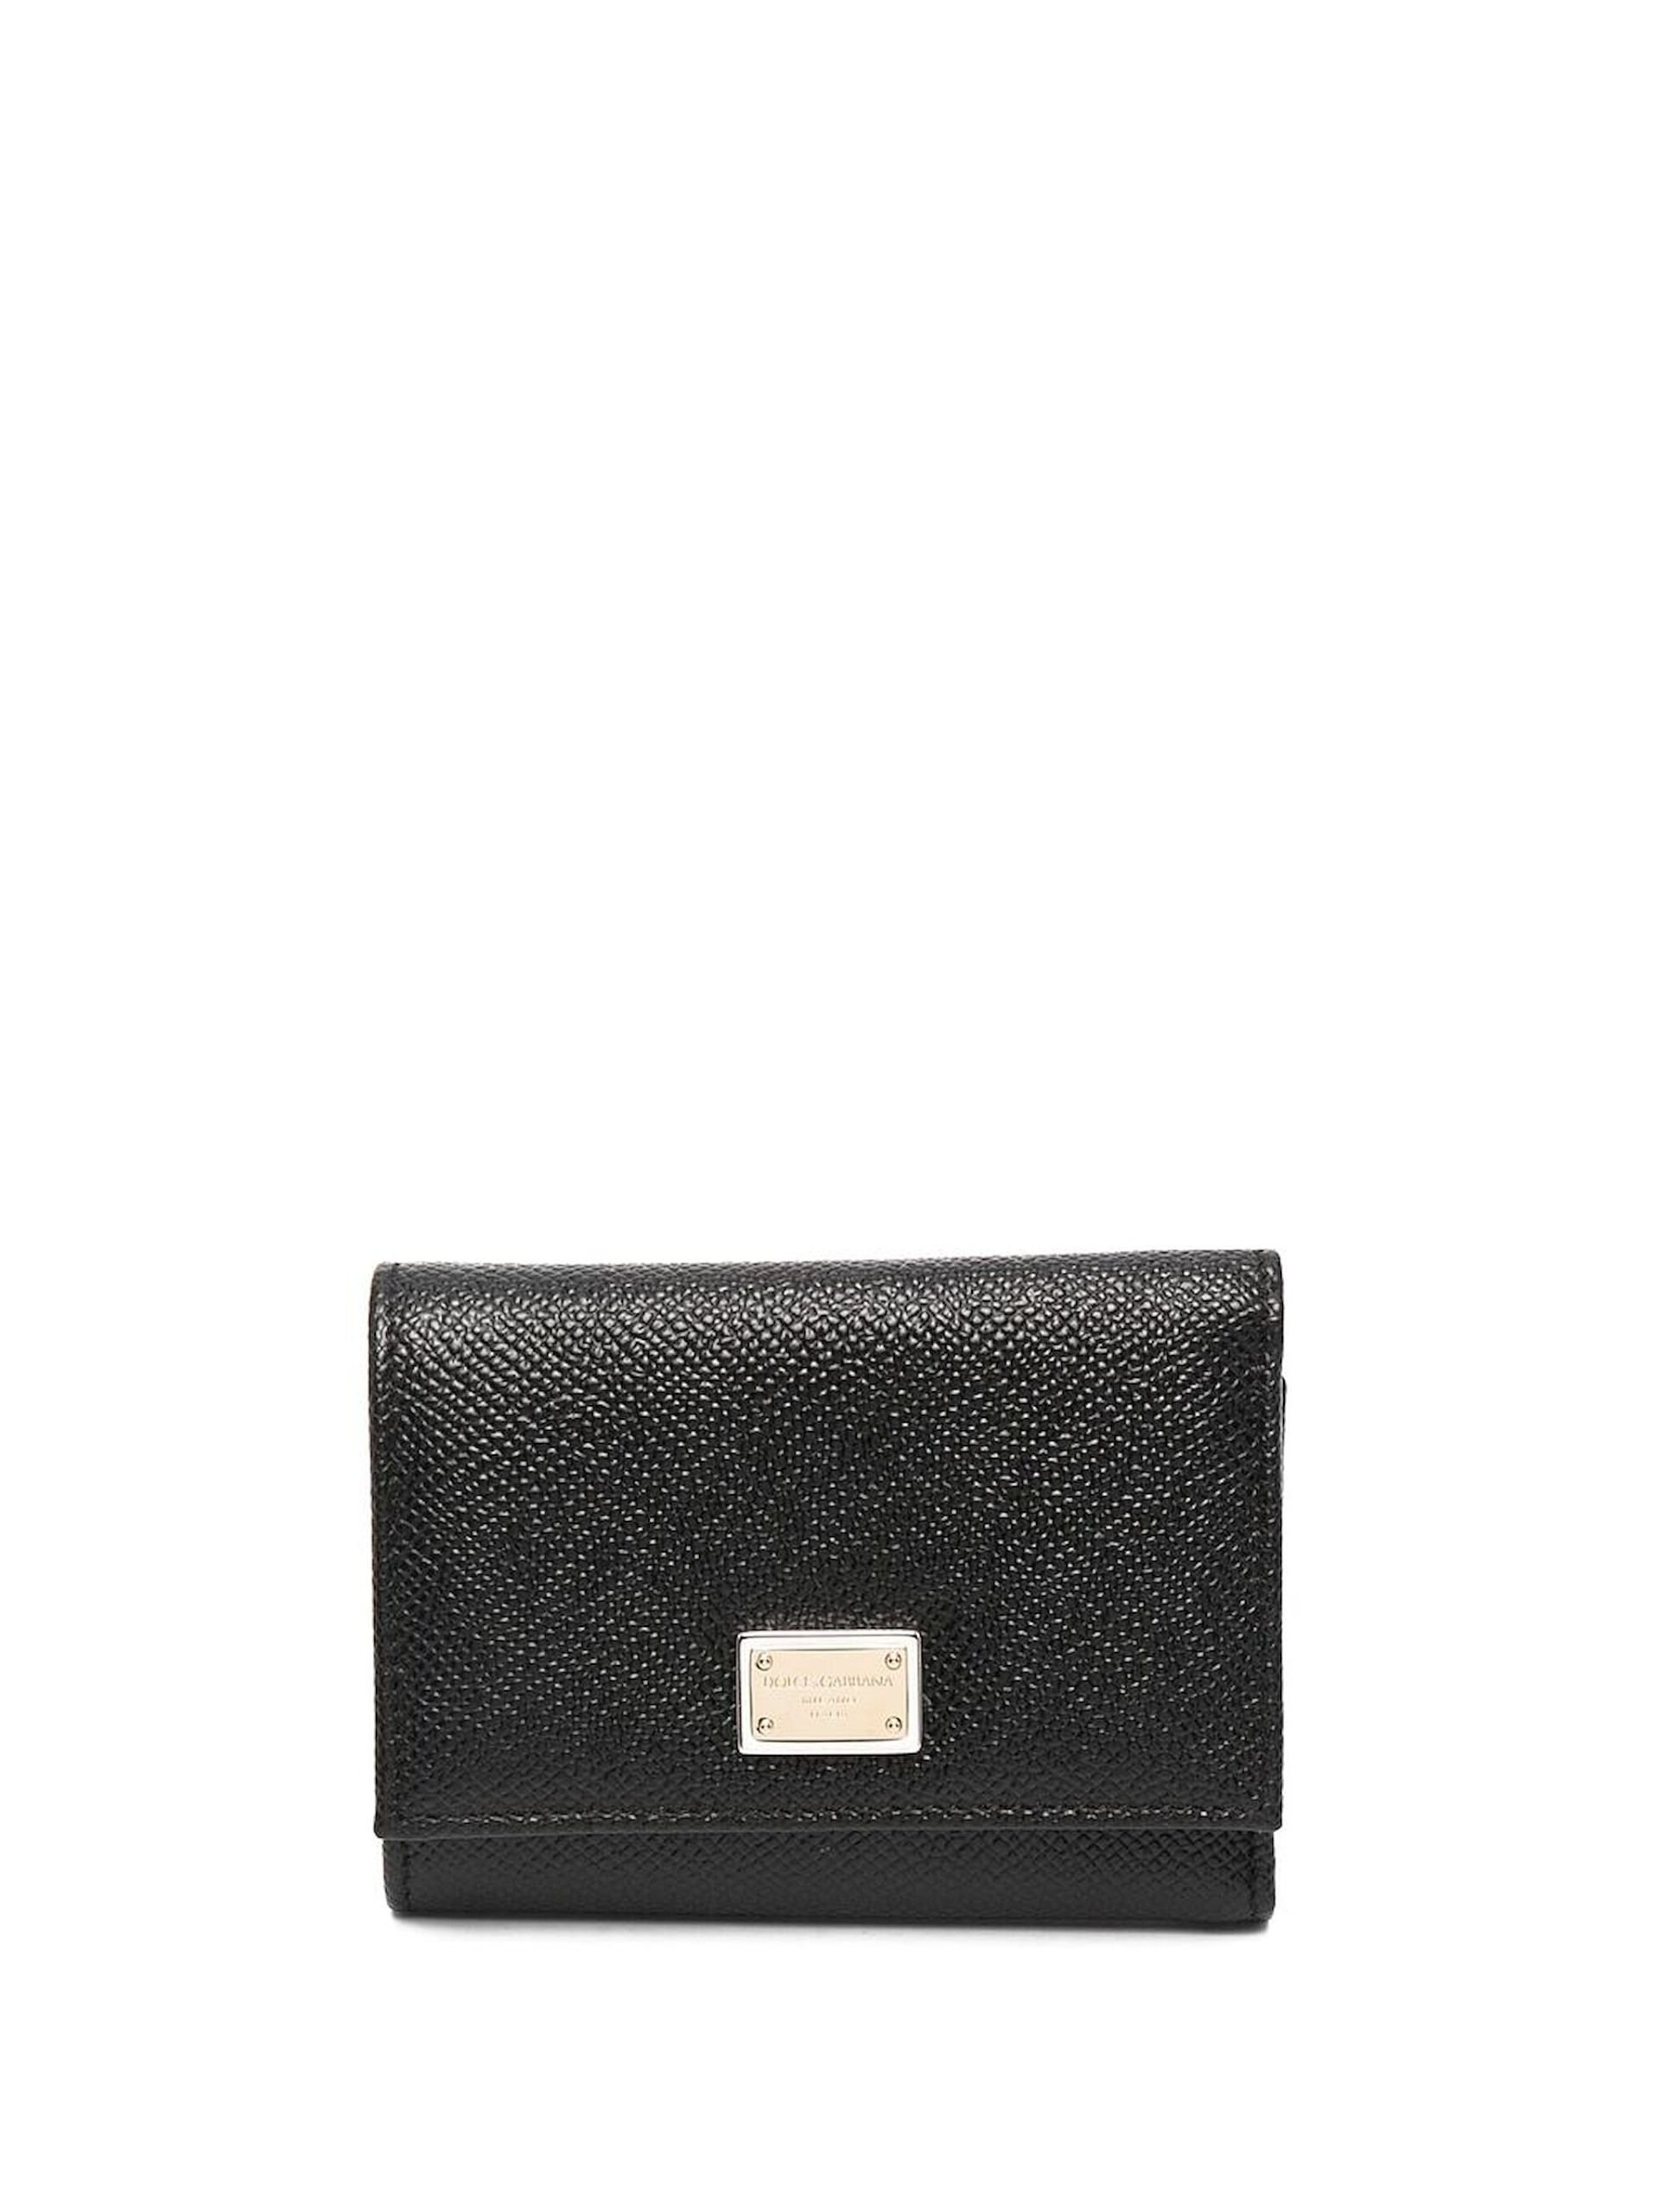 Black Dauphine Leather Wallet - 2